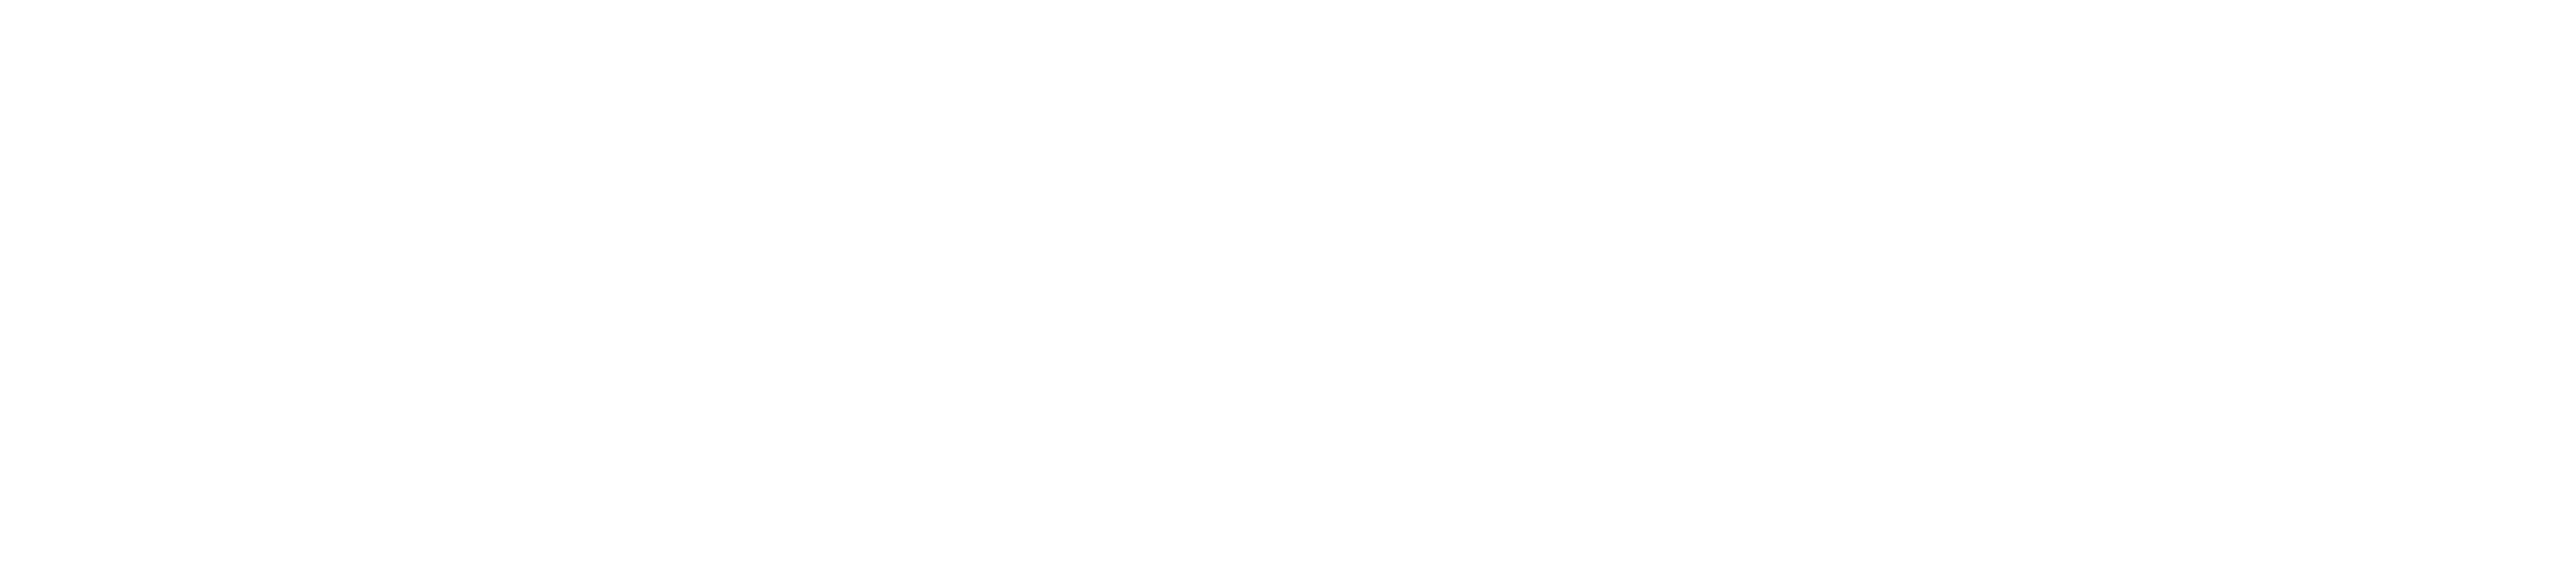 Auburn Exploratory Advising Center Logo